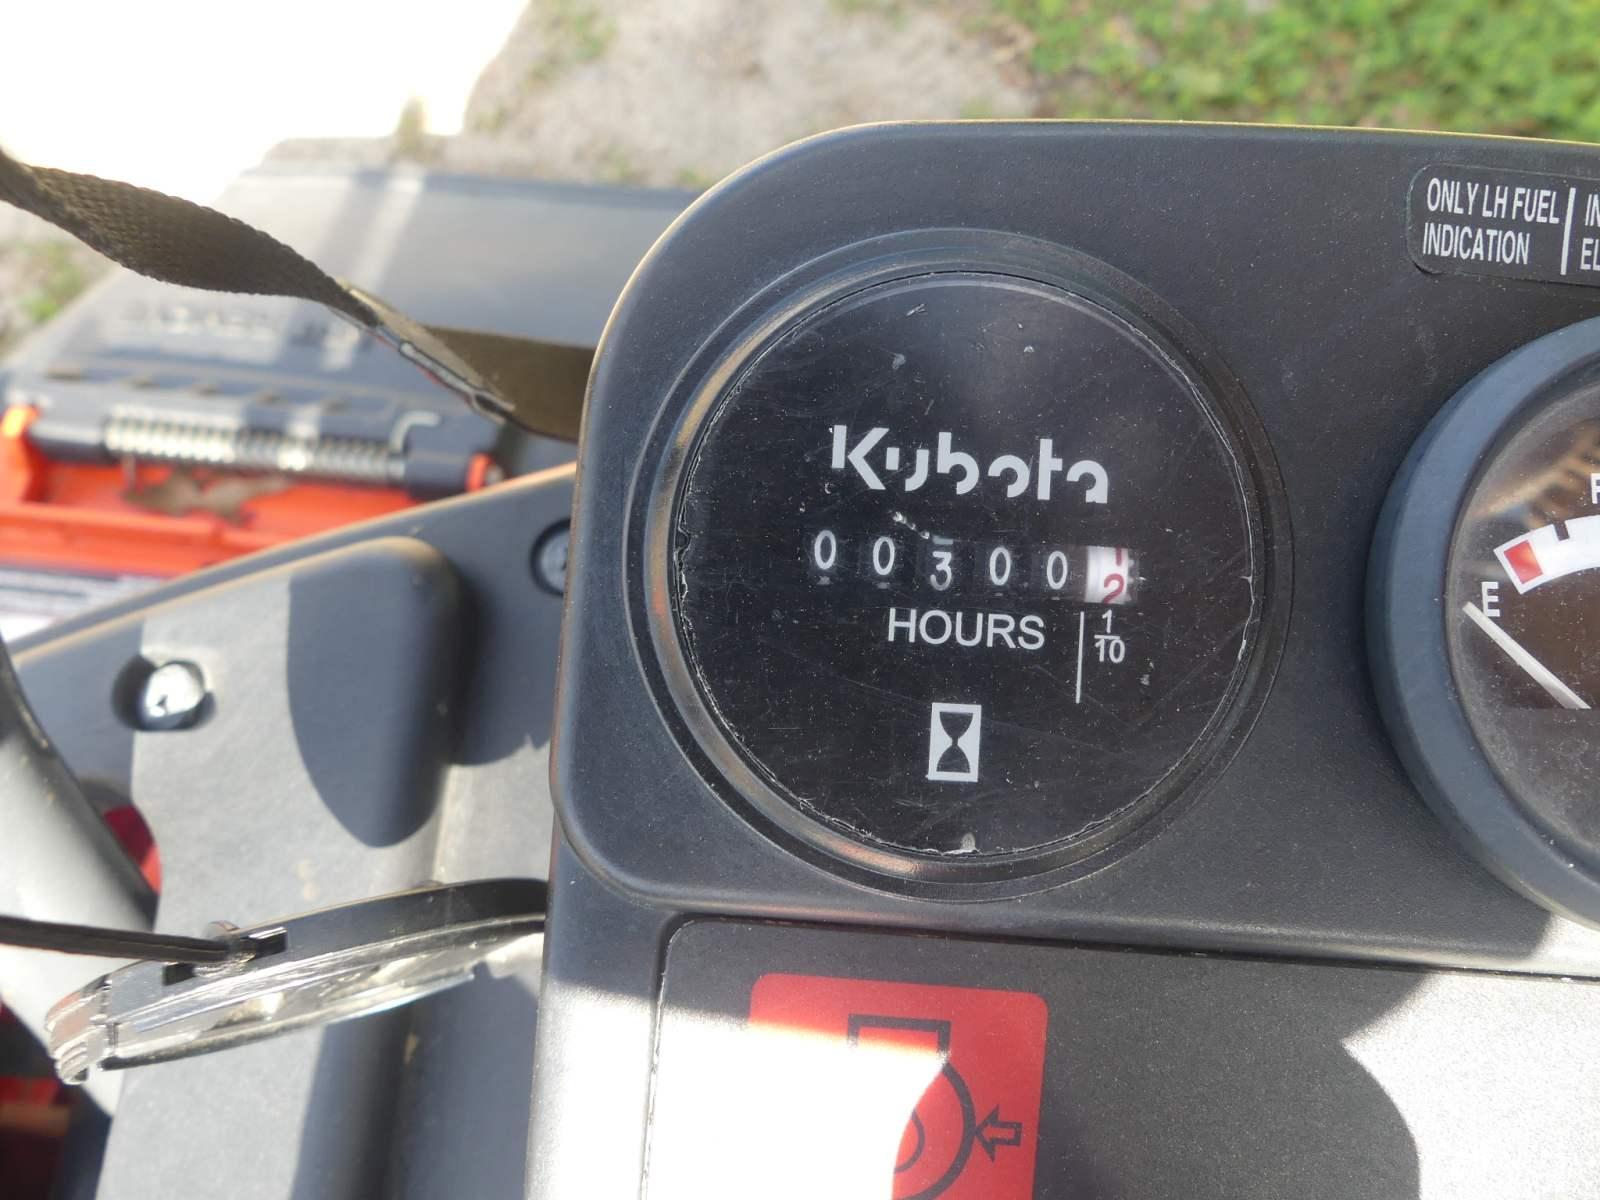 Kubota ZG327 Zero-turn Mower, s/n 53013: Kubota KG2770 27hp Eng., 60" Pro C